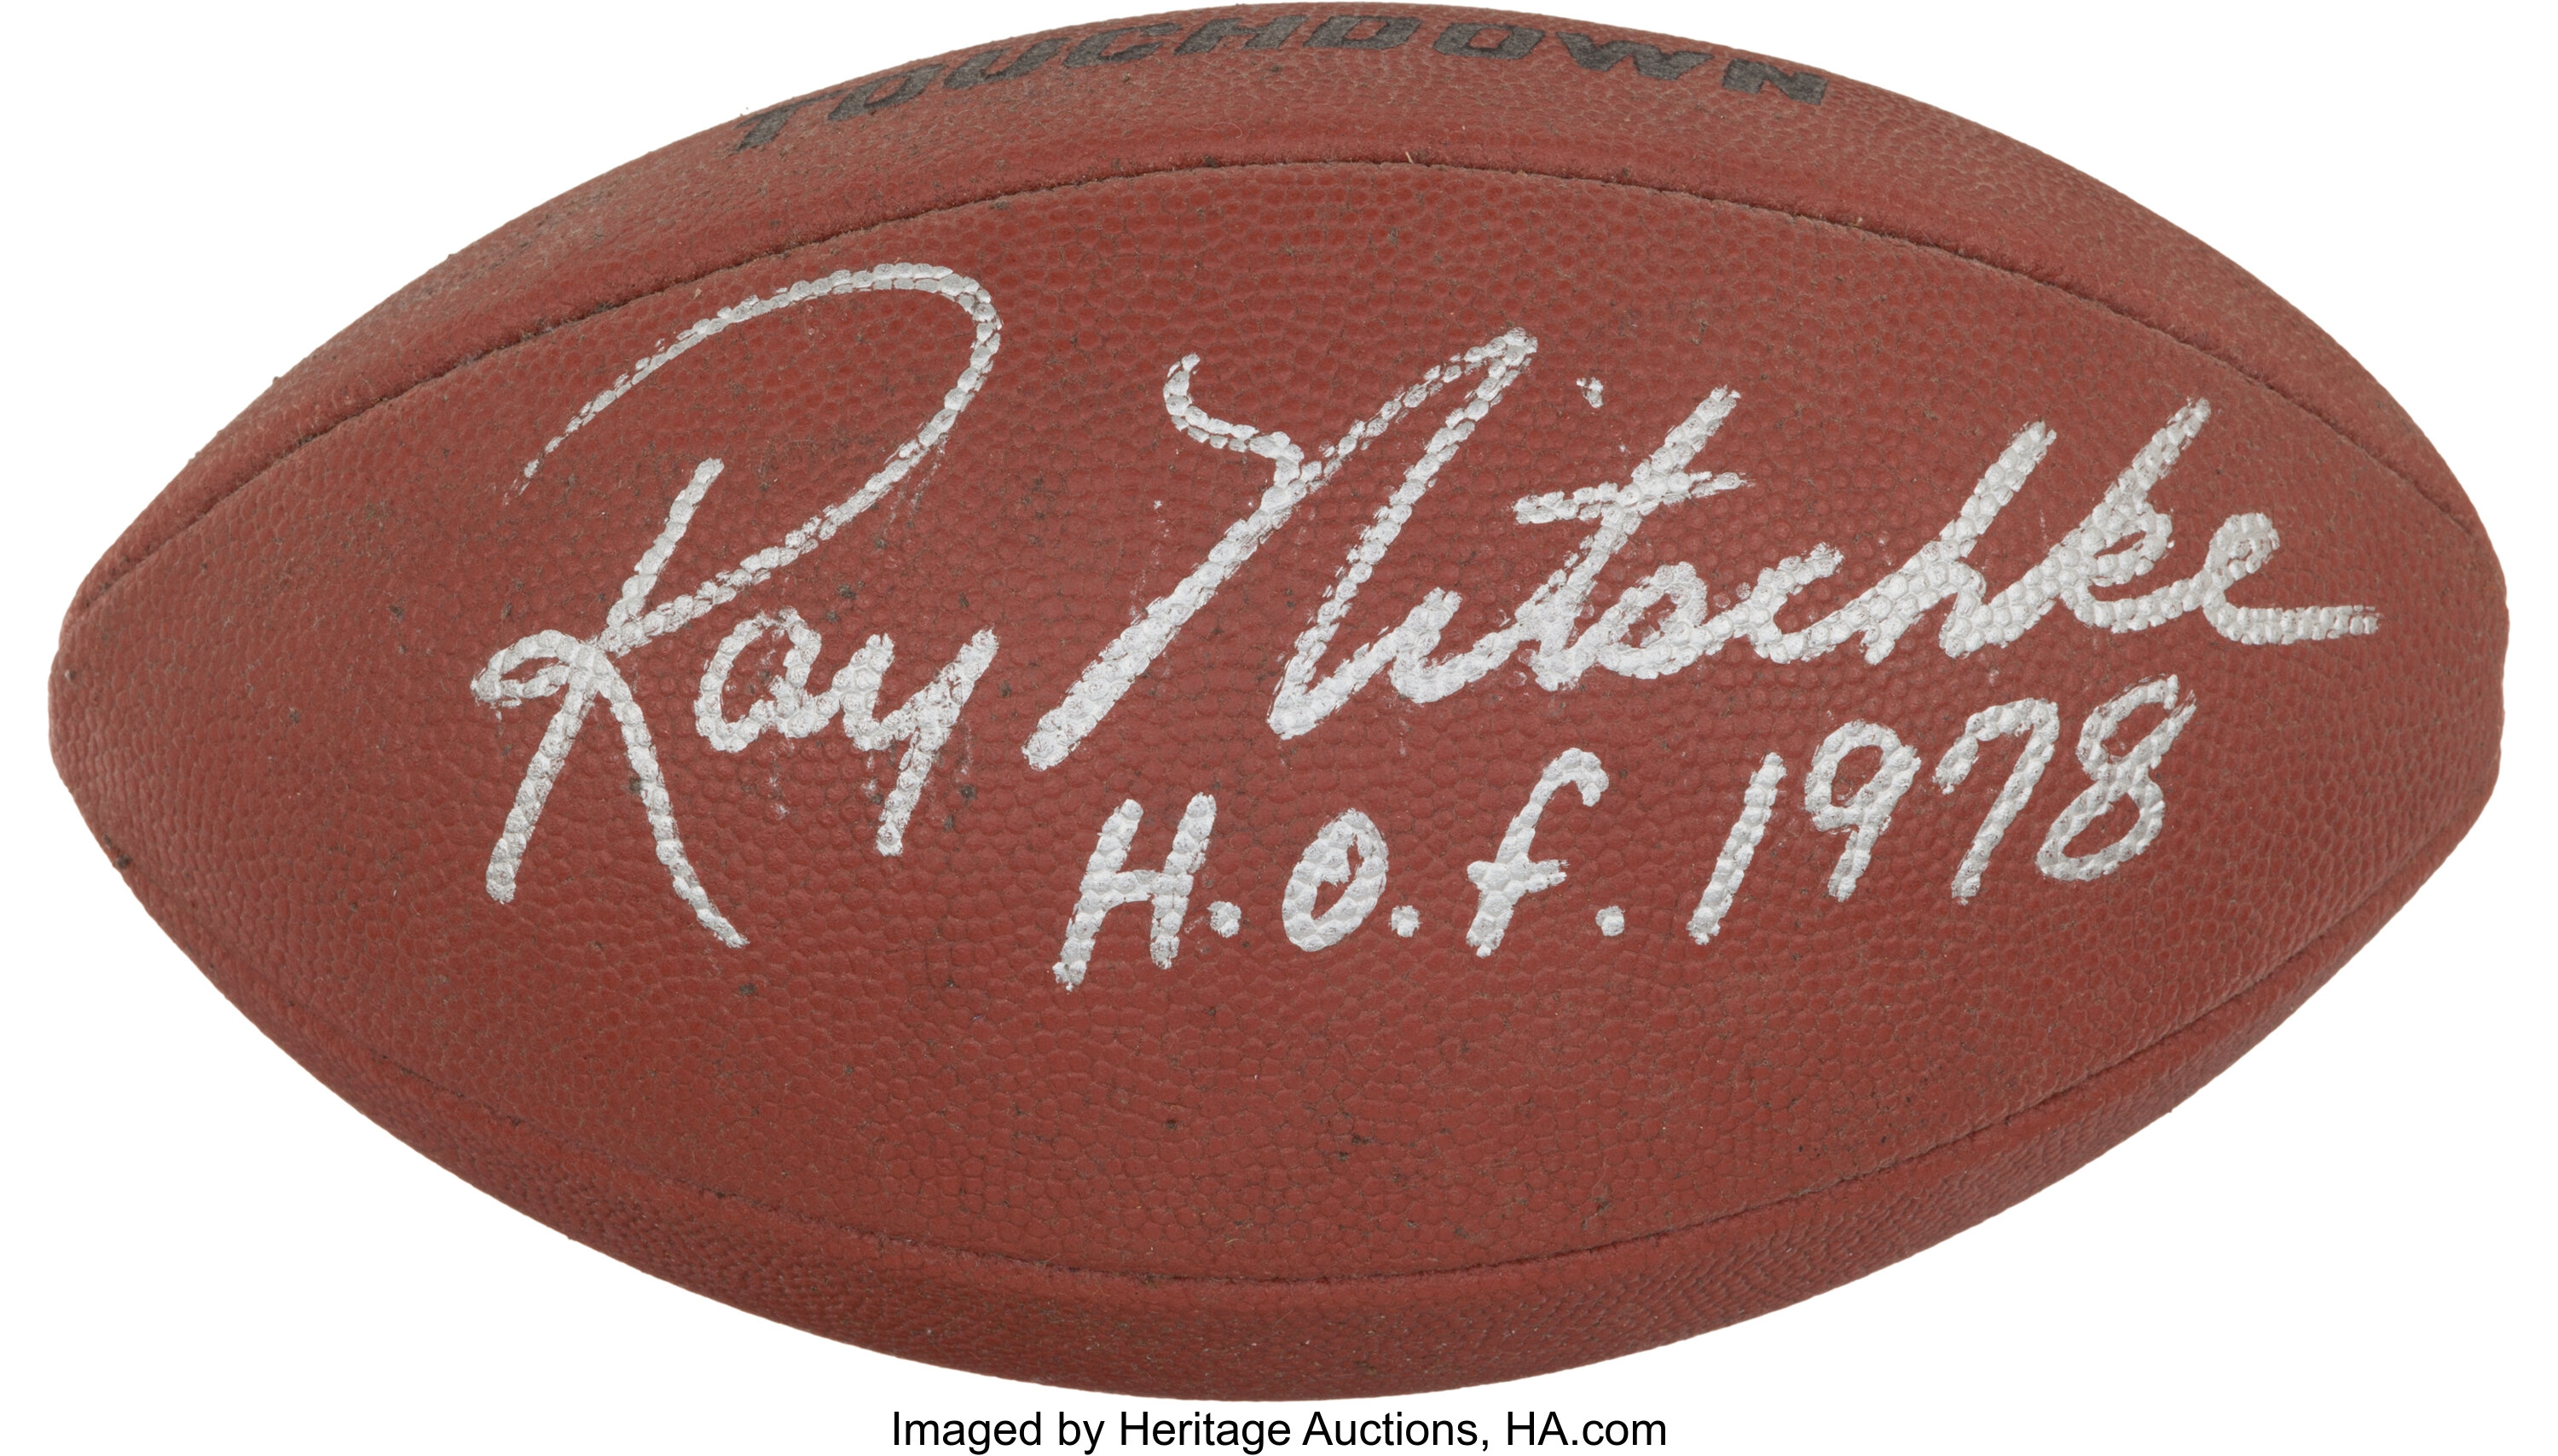 Ray Nitschke Signed Football. Football Collectibles Balls, Lot #44136